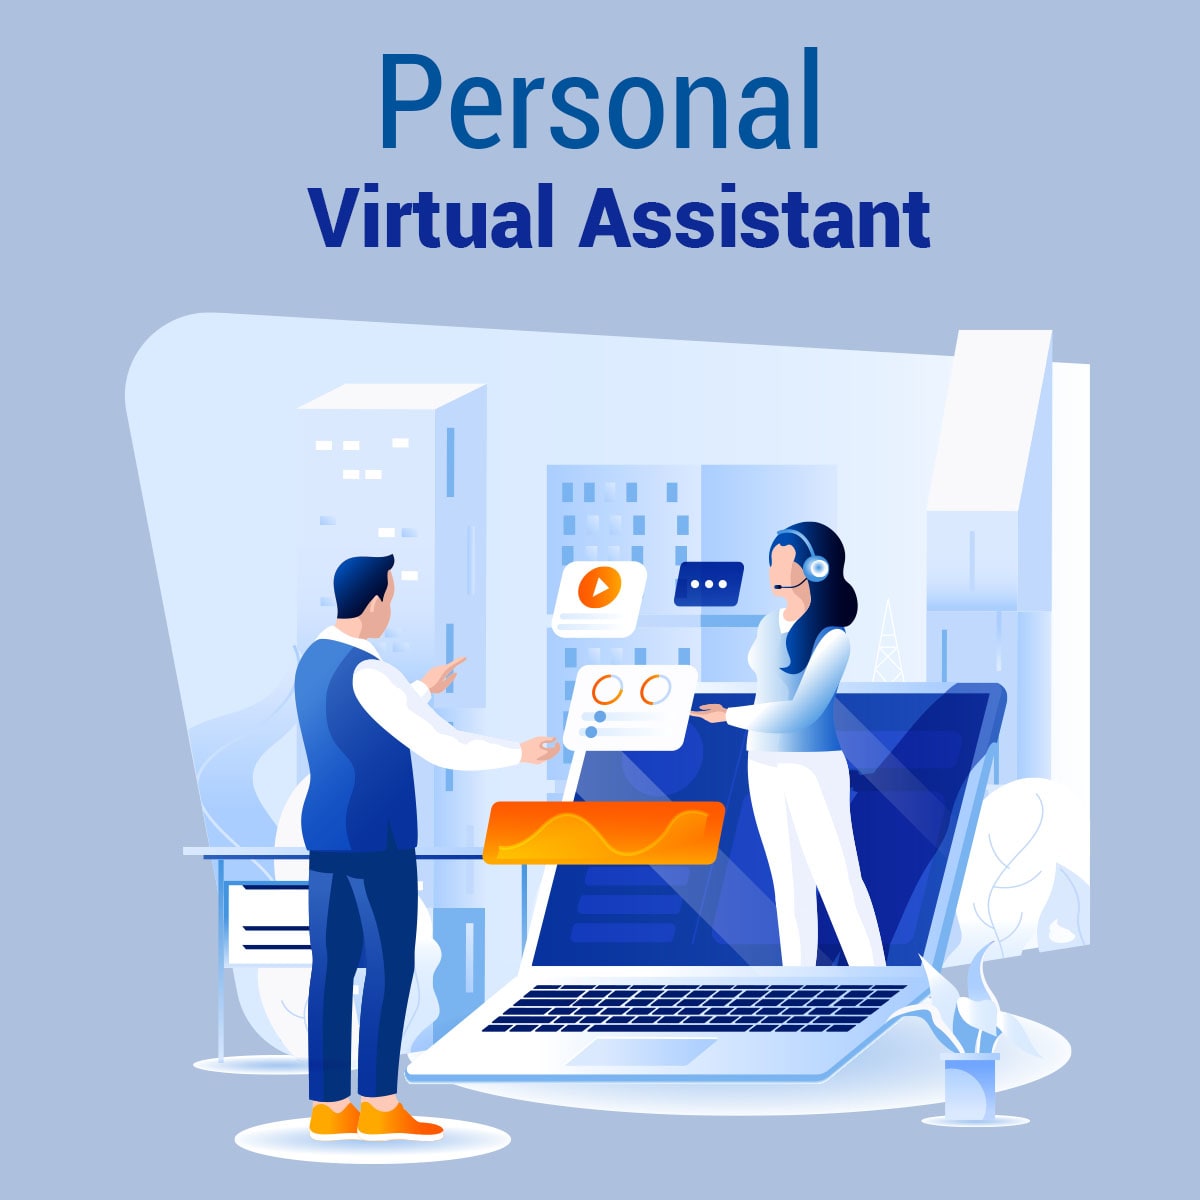 Caribbean Virtual Assistants